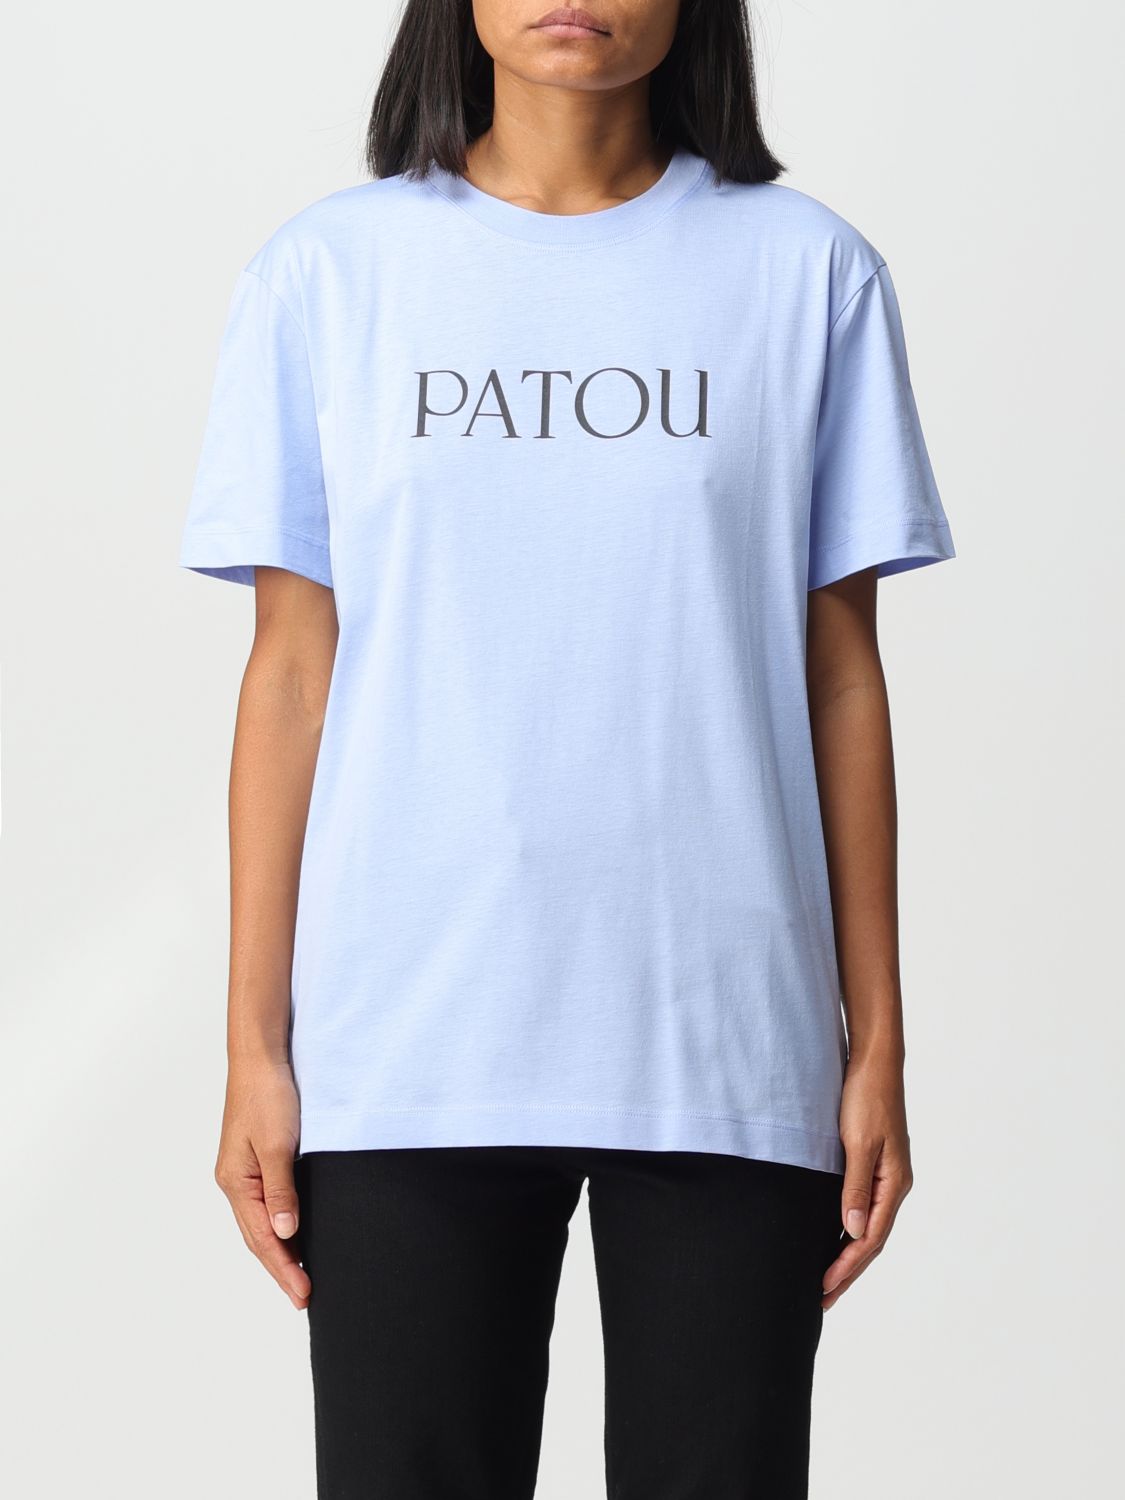 PATOU T-SHIRT PATOU WOMAN COLOR BLUE,E69063009